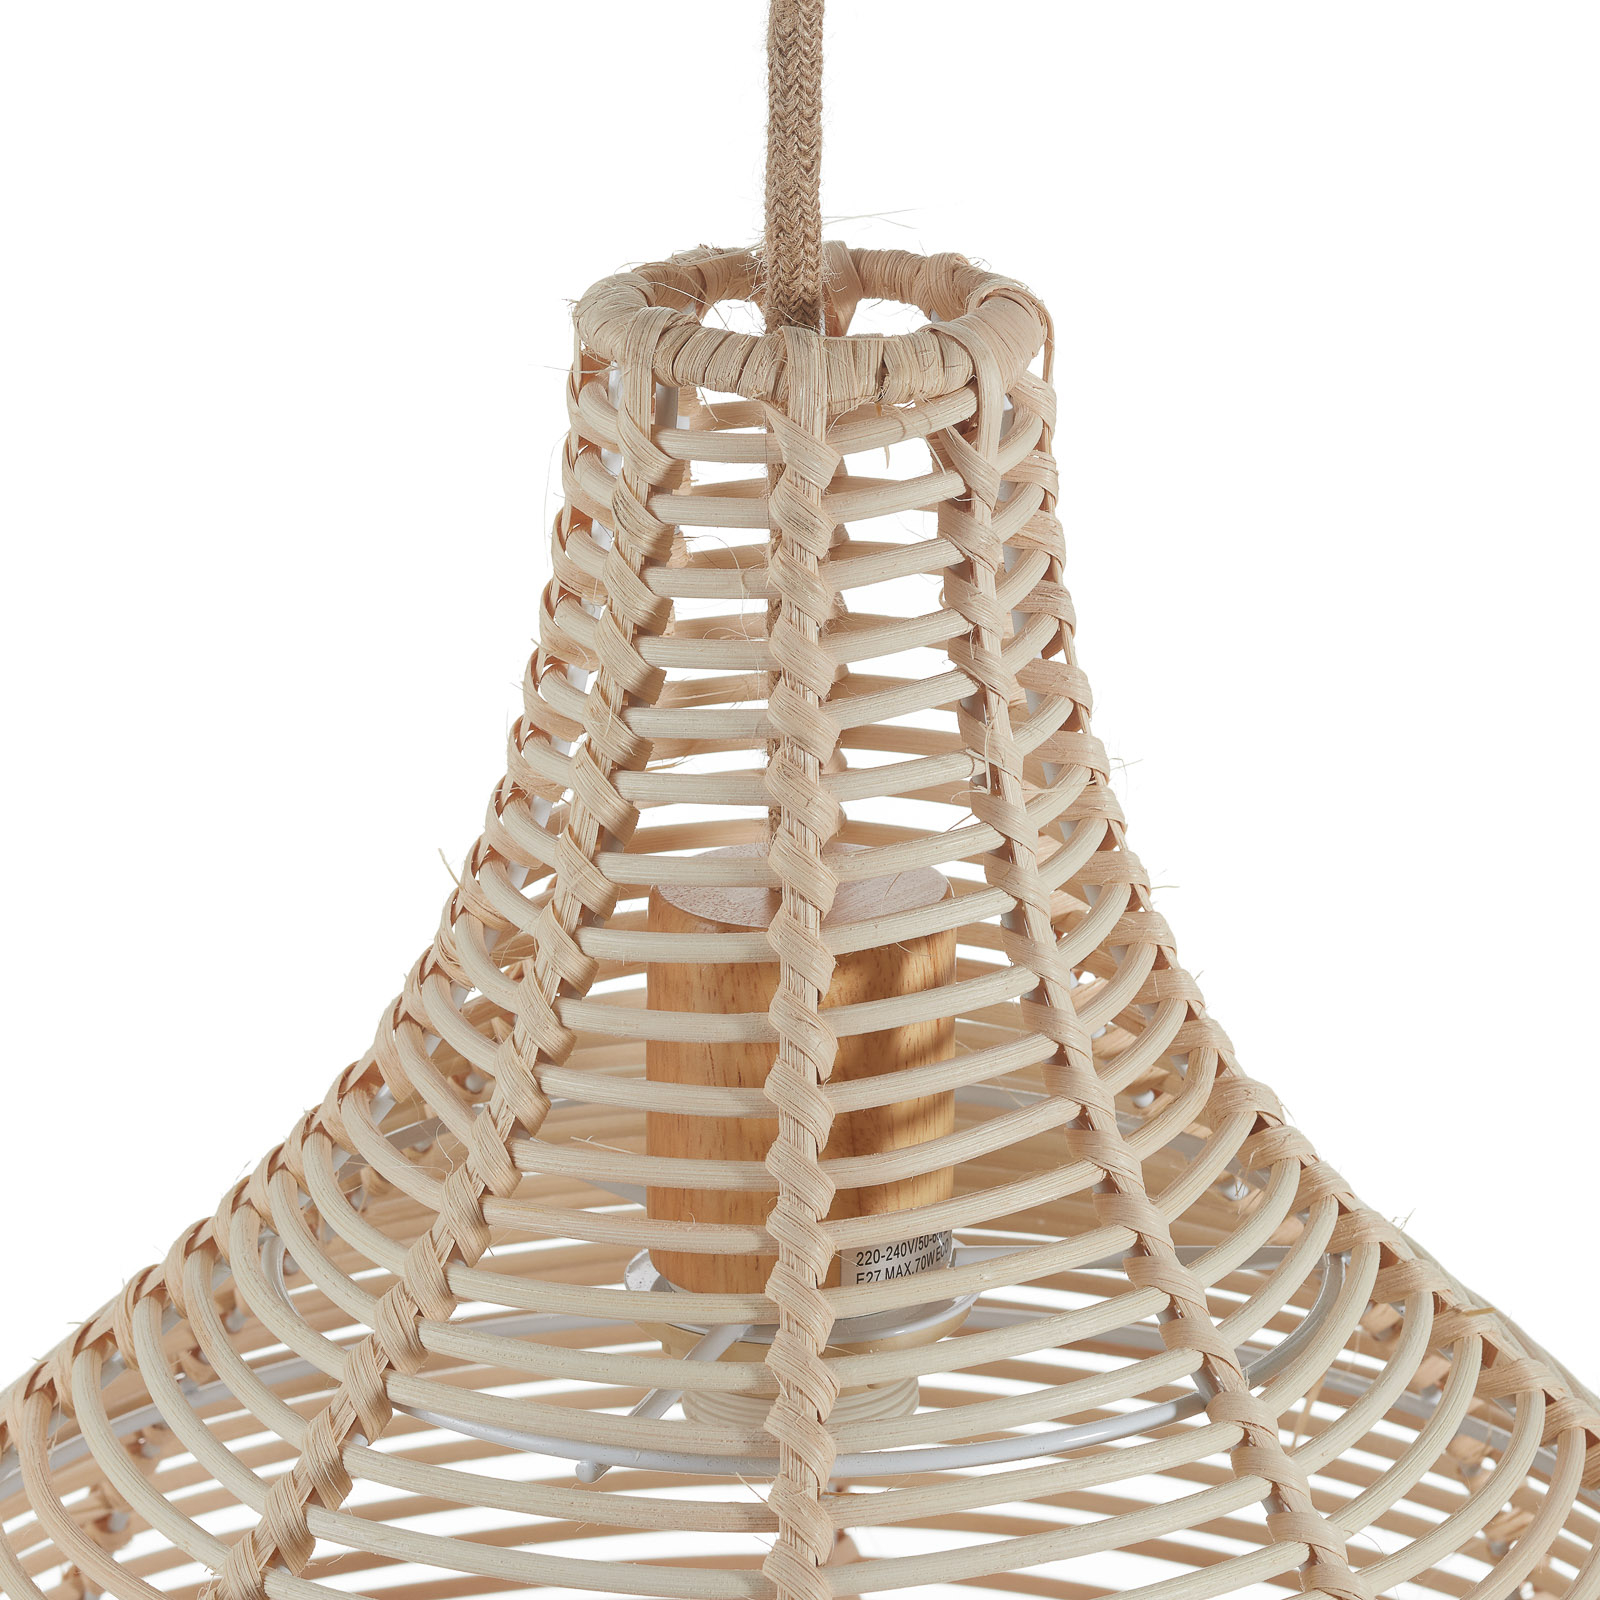 Broni hanging light made of wood, Ø 42 cm